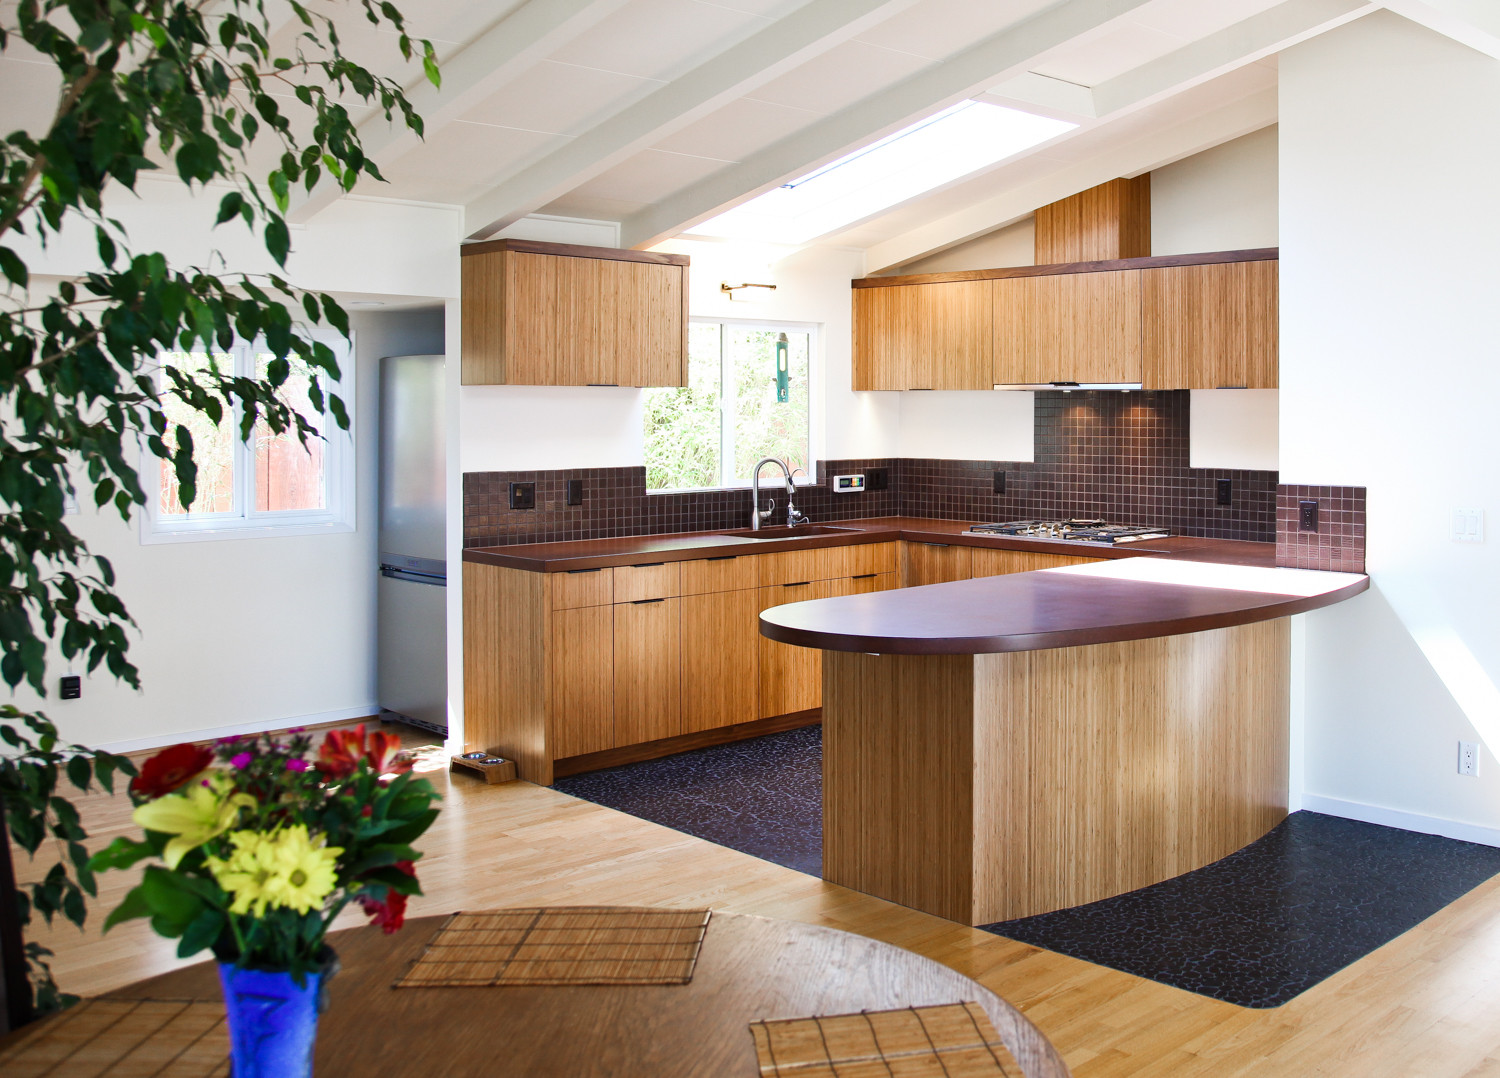 Range couverts vertical en bambou  Diy wood projects furniture, Best  kitchen designs, Wood kitchen tool